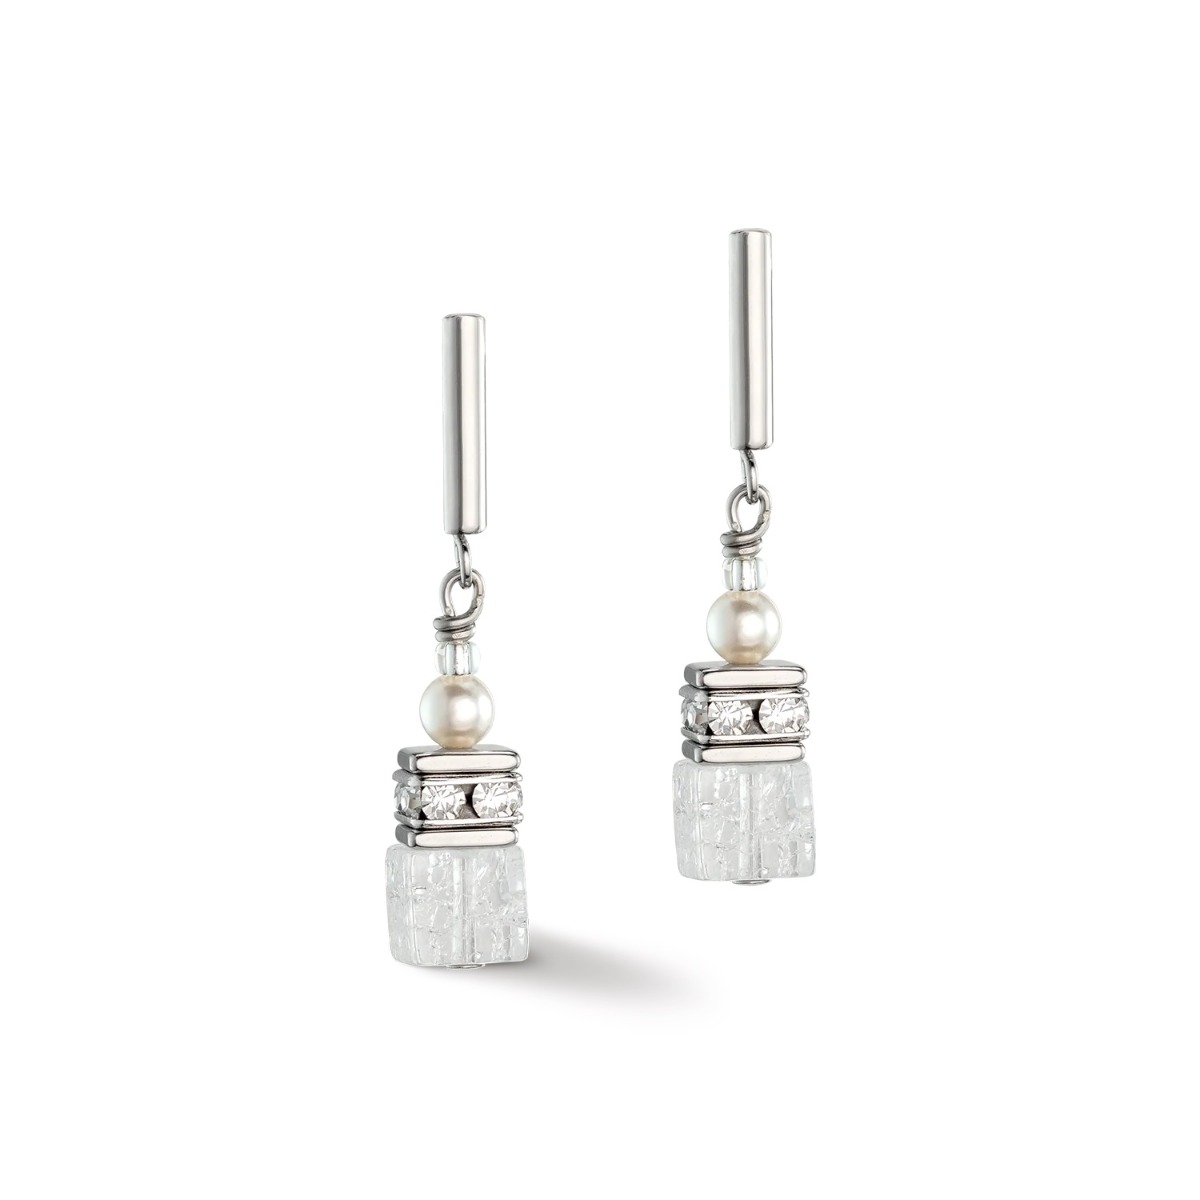 Coeur De Lion GeoCUBE Precious Fusion Pearls Earrings - Silver and White 5086211400